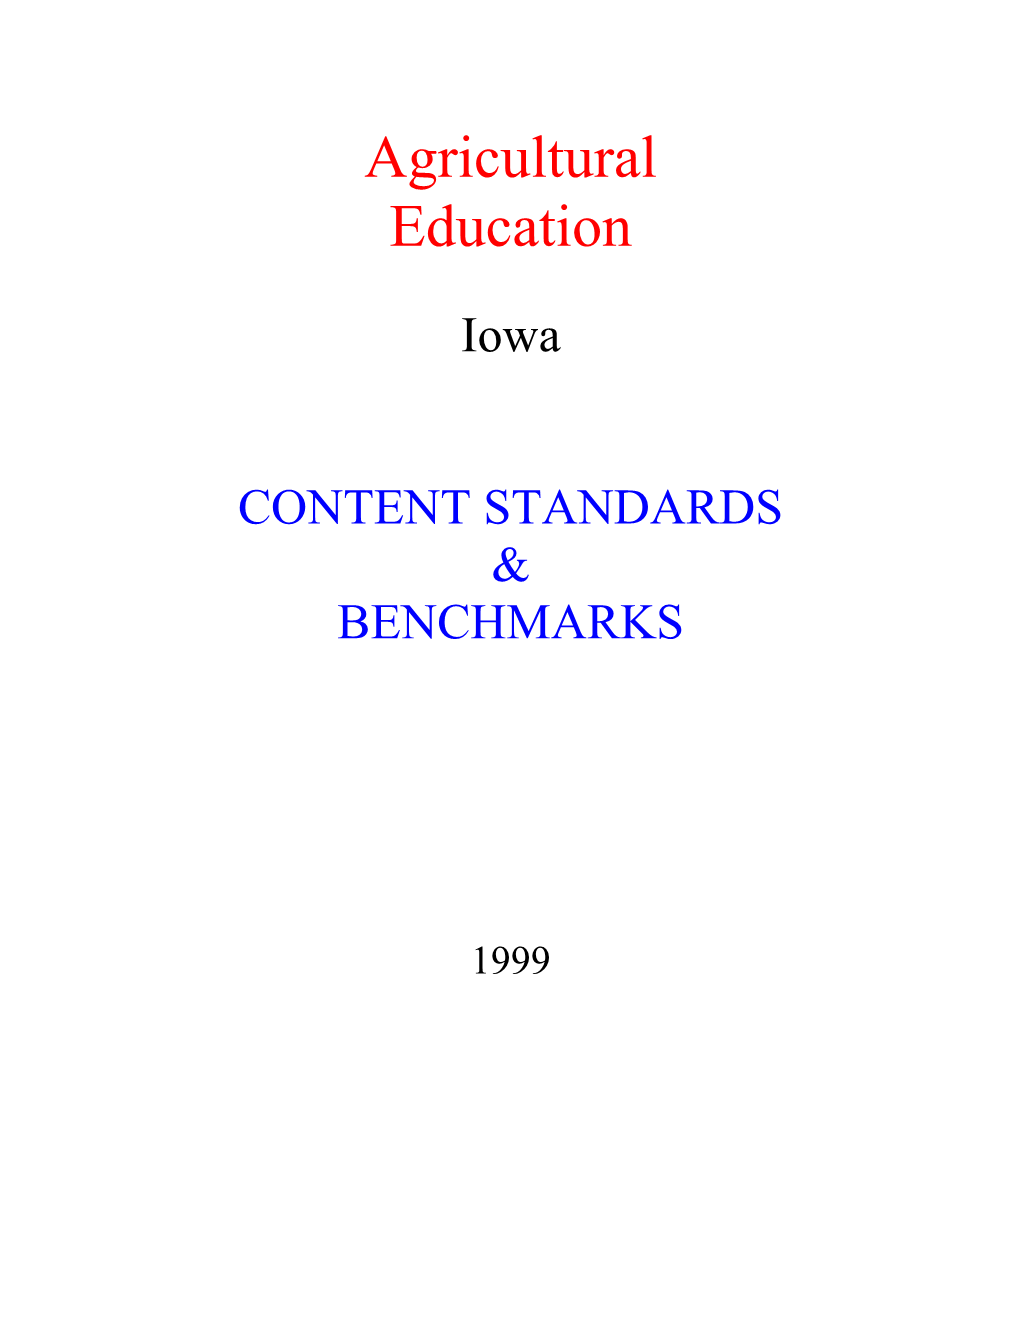 Standards, Benchmarks & Performance Indicators (Competencies)